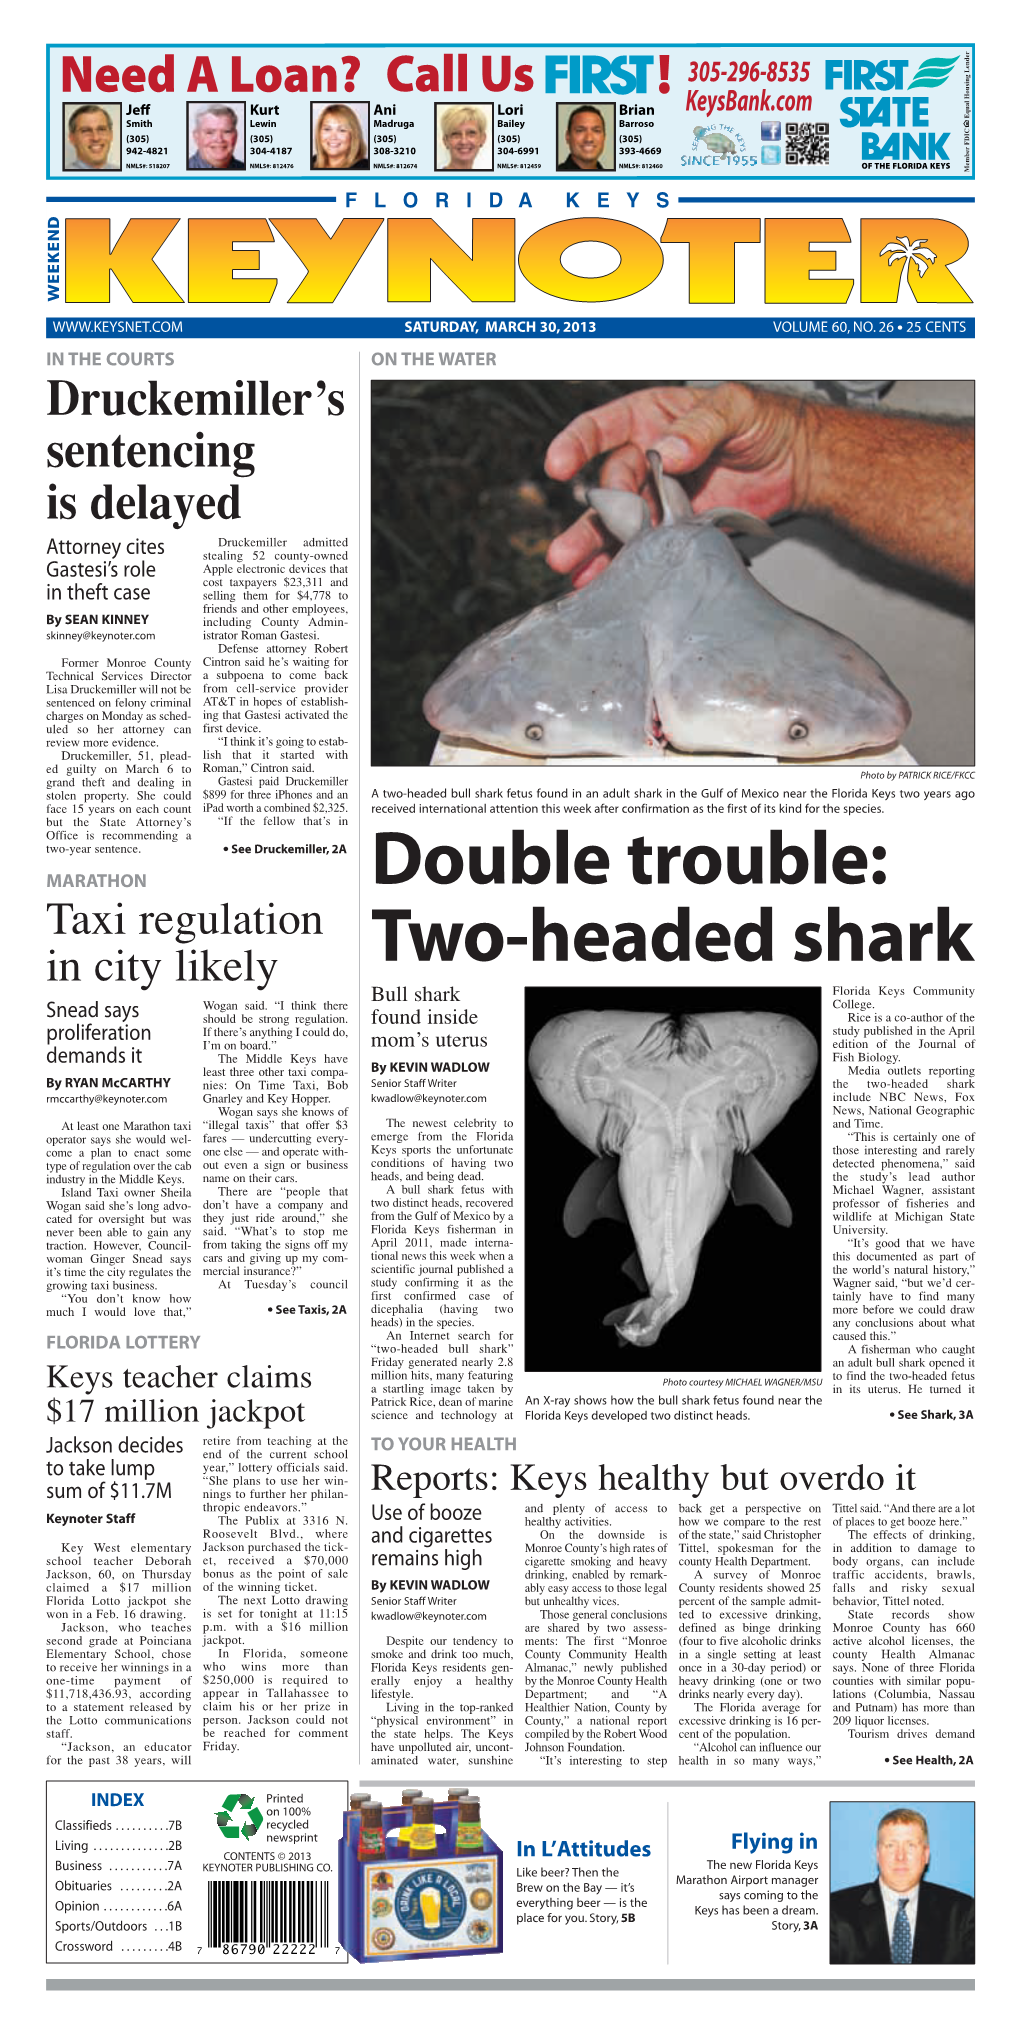 Double Trouble: Two-Headed Shark